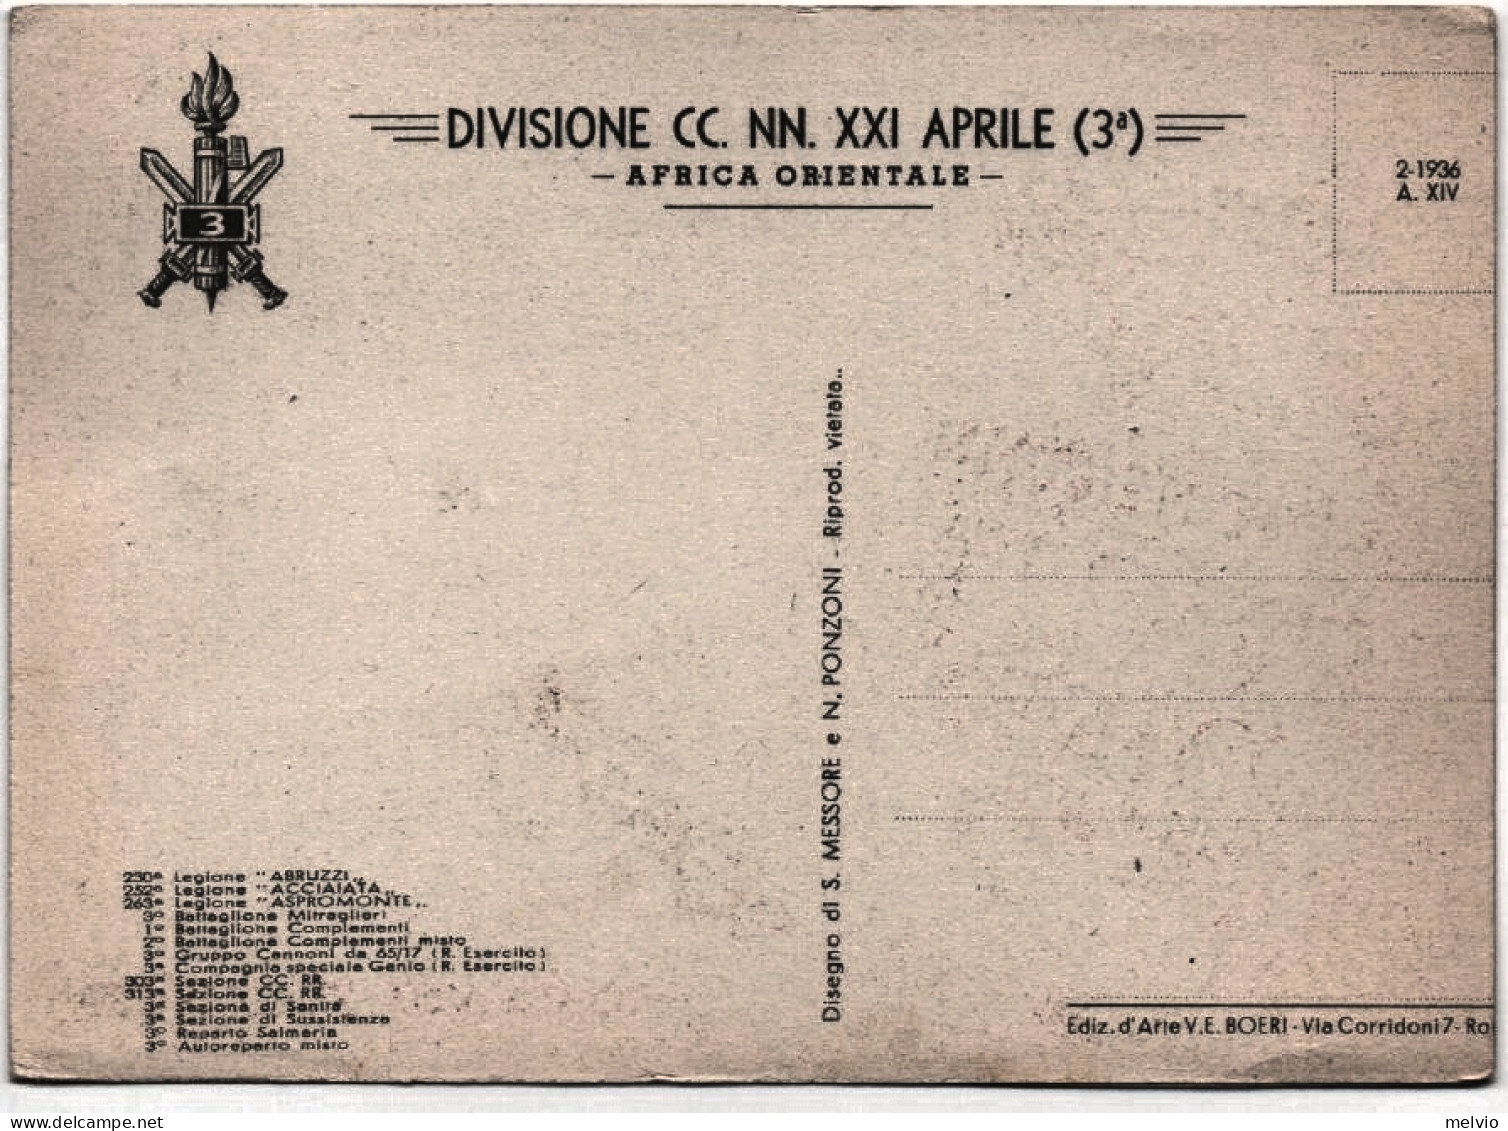 Divisione CC.NN. XXI Aprile (3^ ) Africa Orientale, "ROMA NOMEN ET OMEN", Illust - Italian Eastern Africa